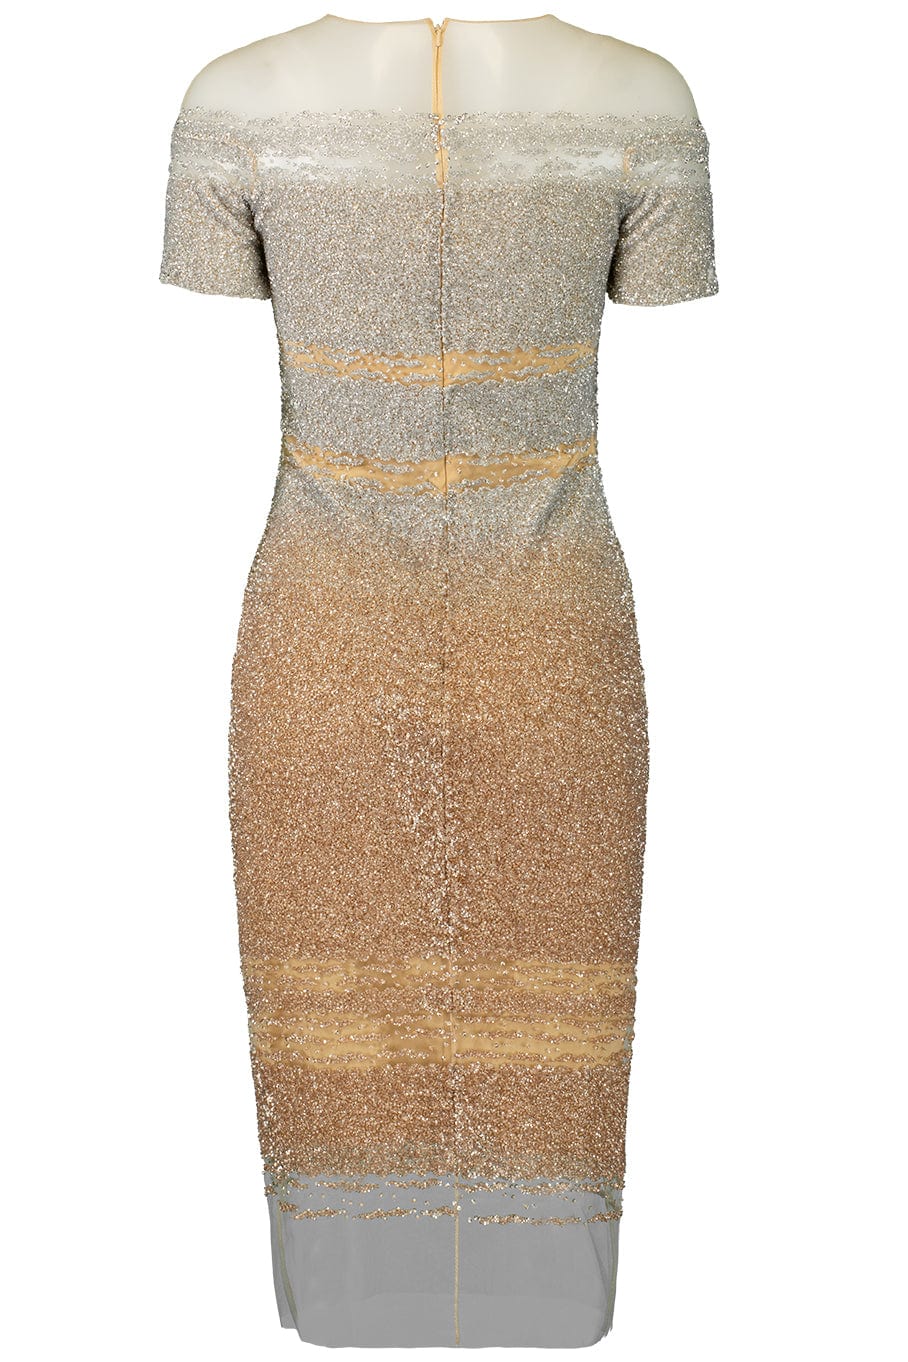 PAMELLA ROLAND-Silver & Gold Ombre Sequin Cocktail Dress-